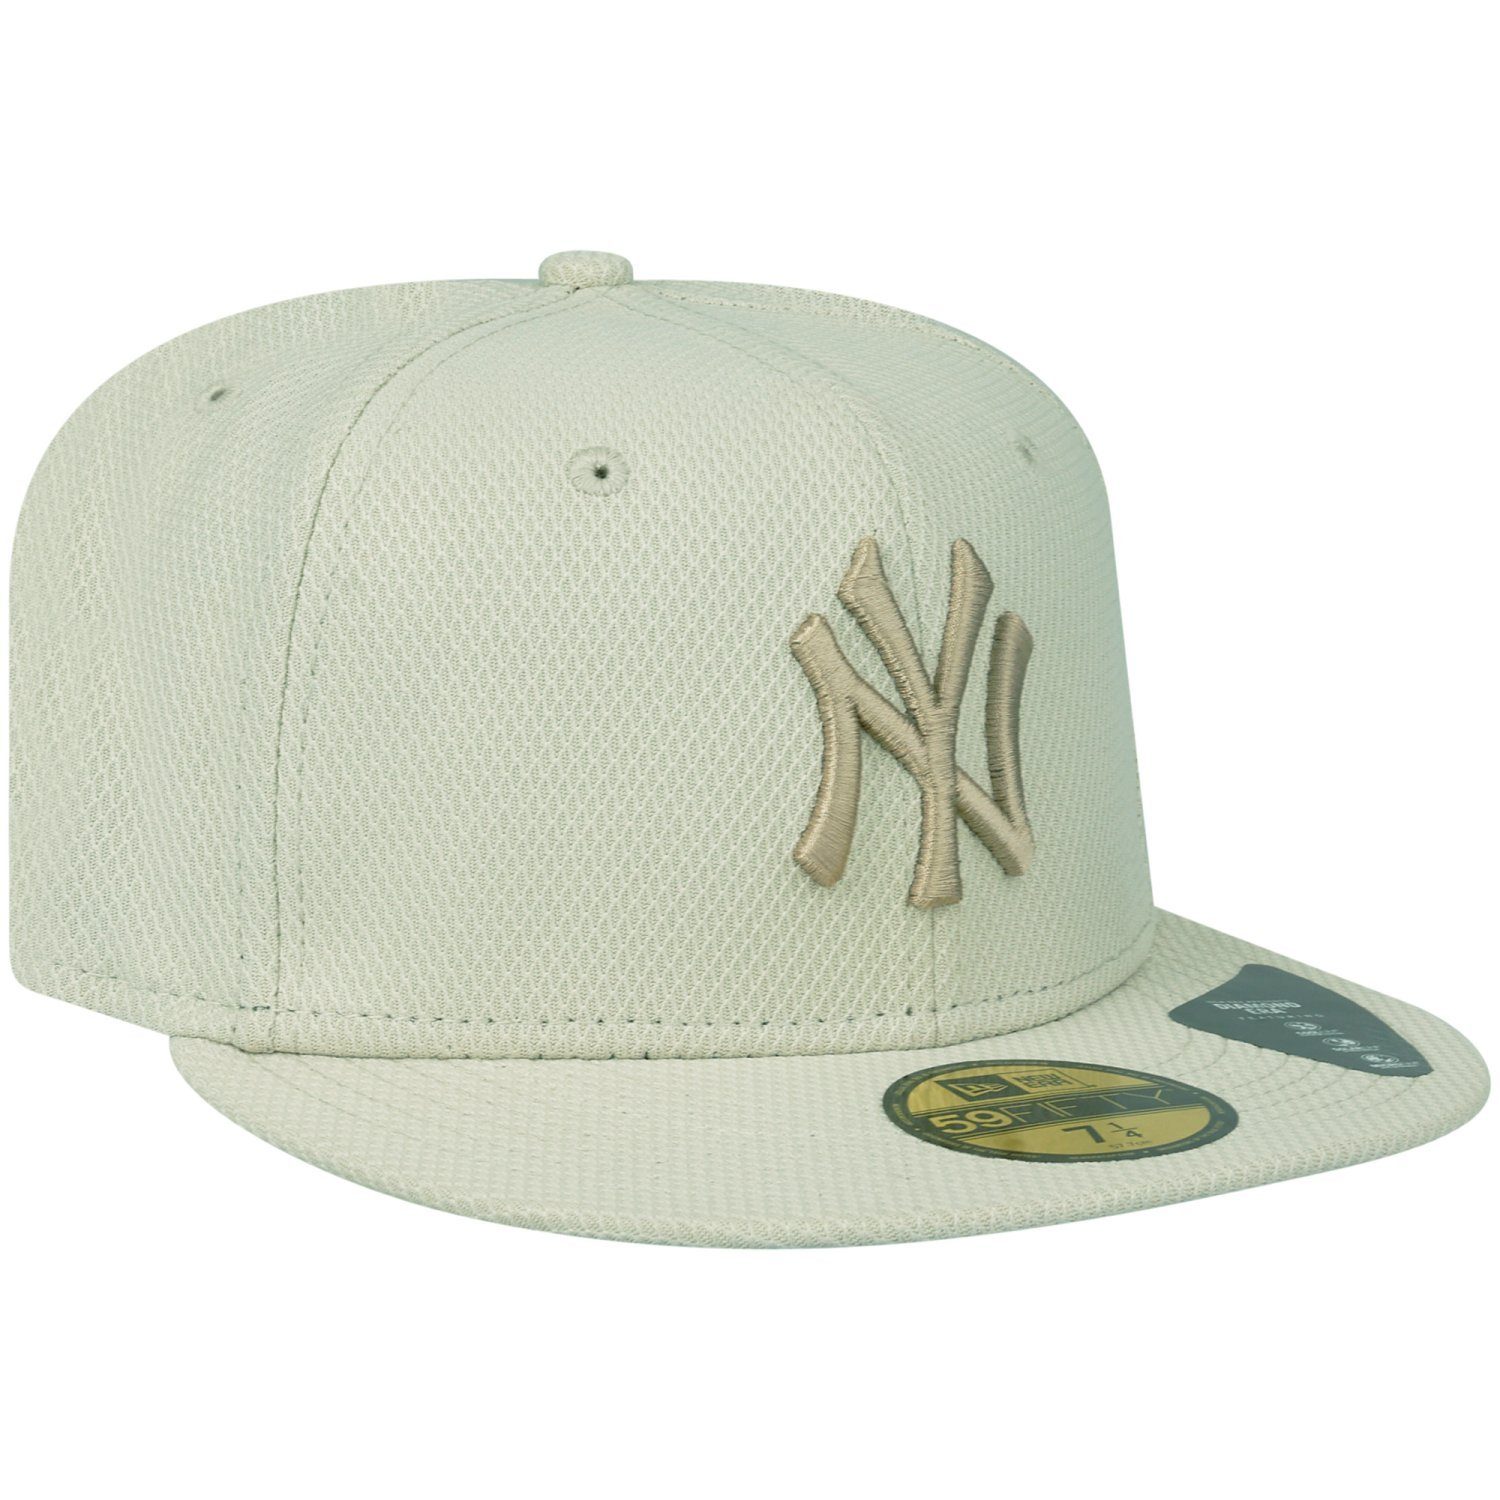 New Era Yankees York Fitted New Cap 59Fifty DIAMOND